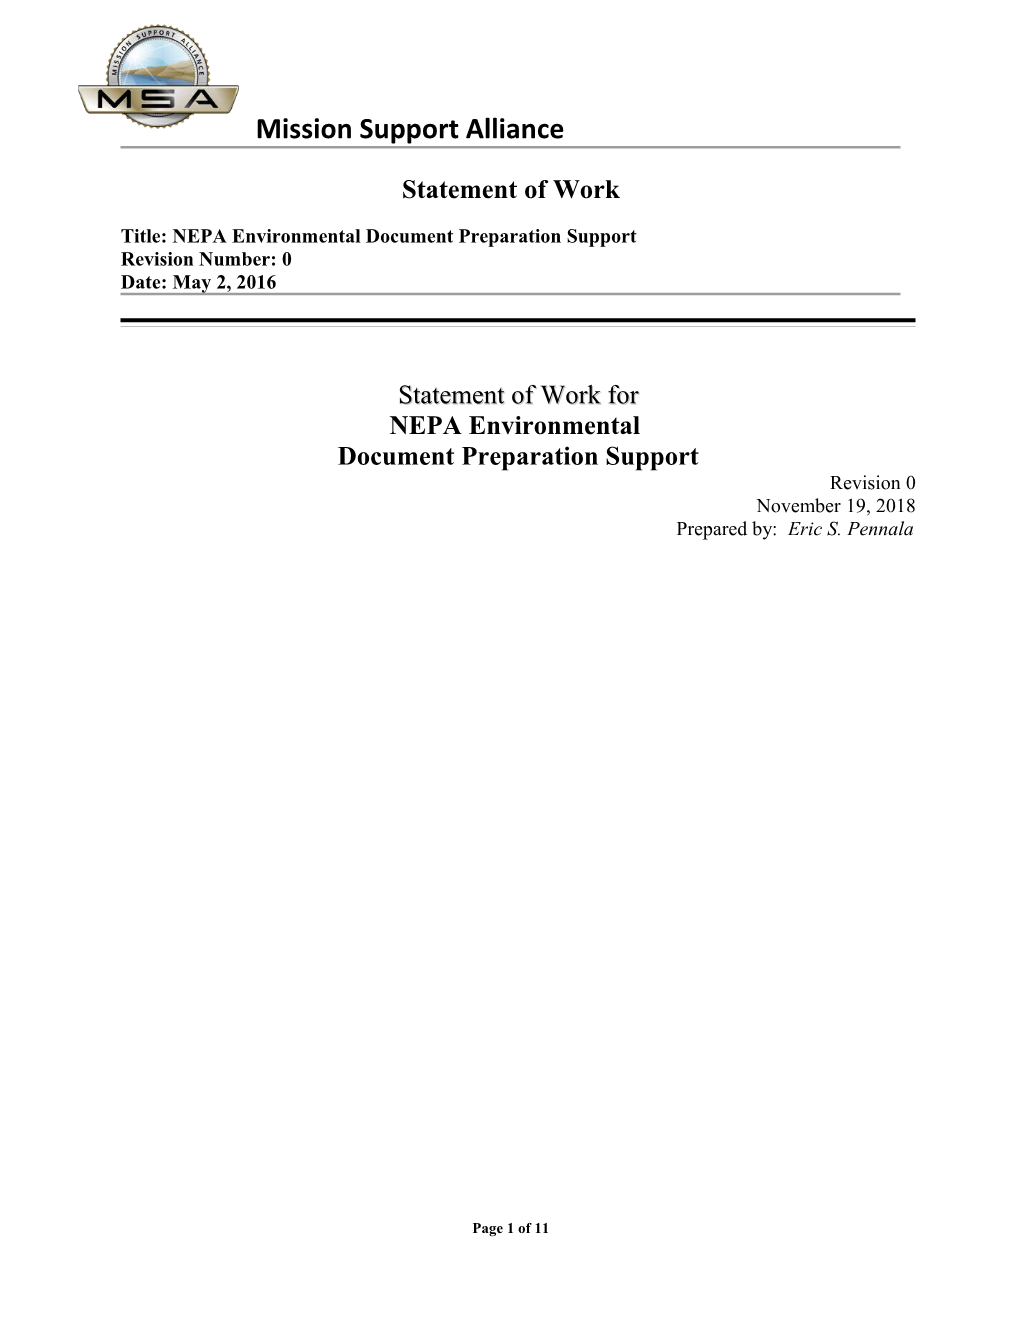 Title:NEPA Environmental Document Preparation Support